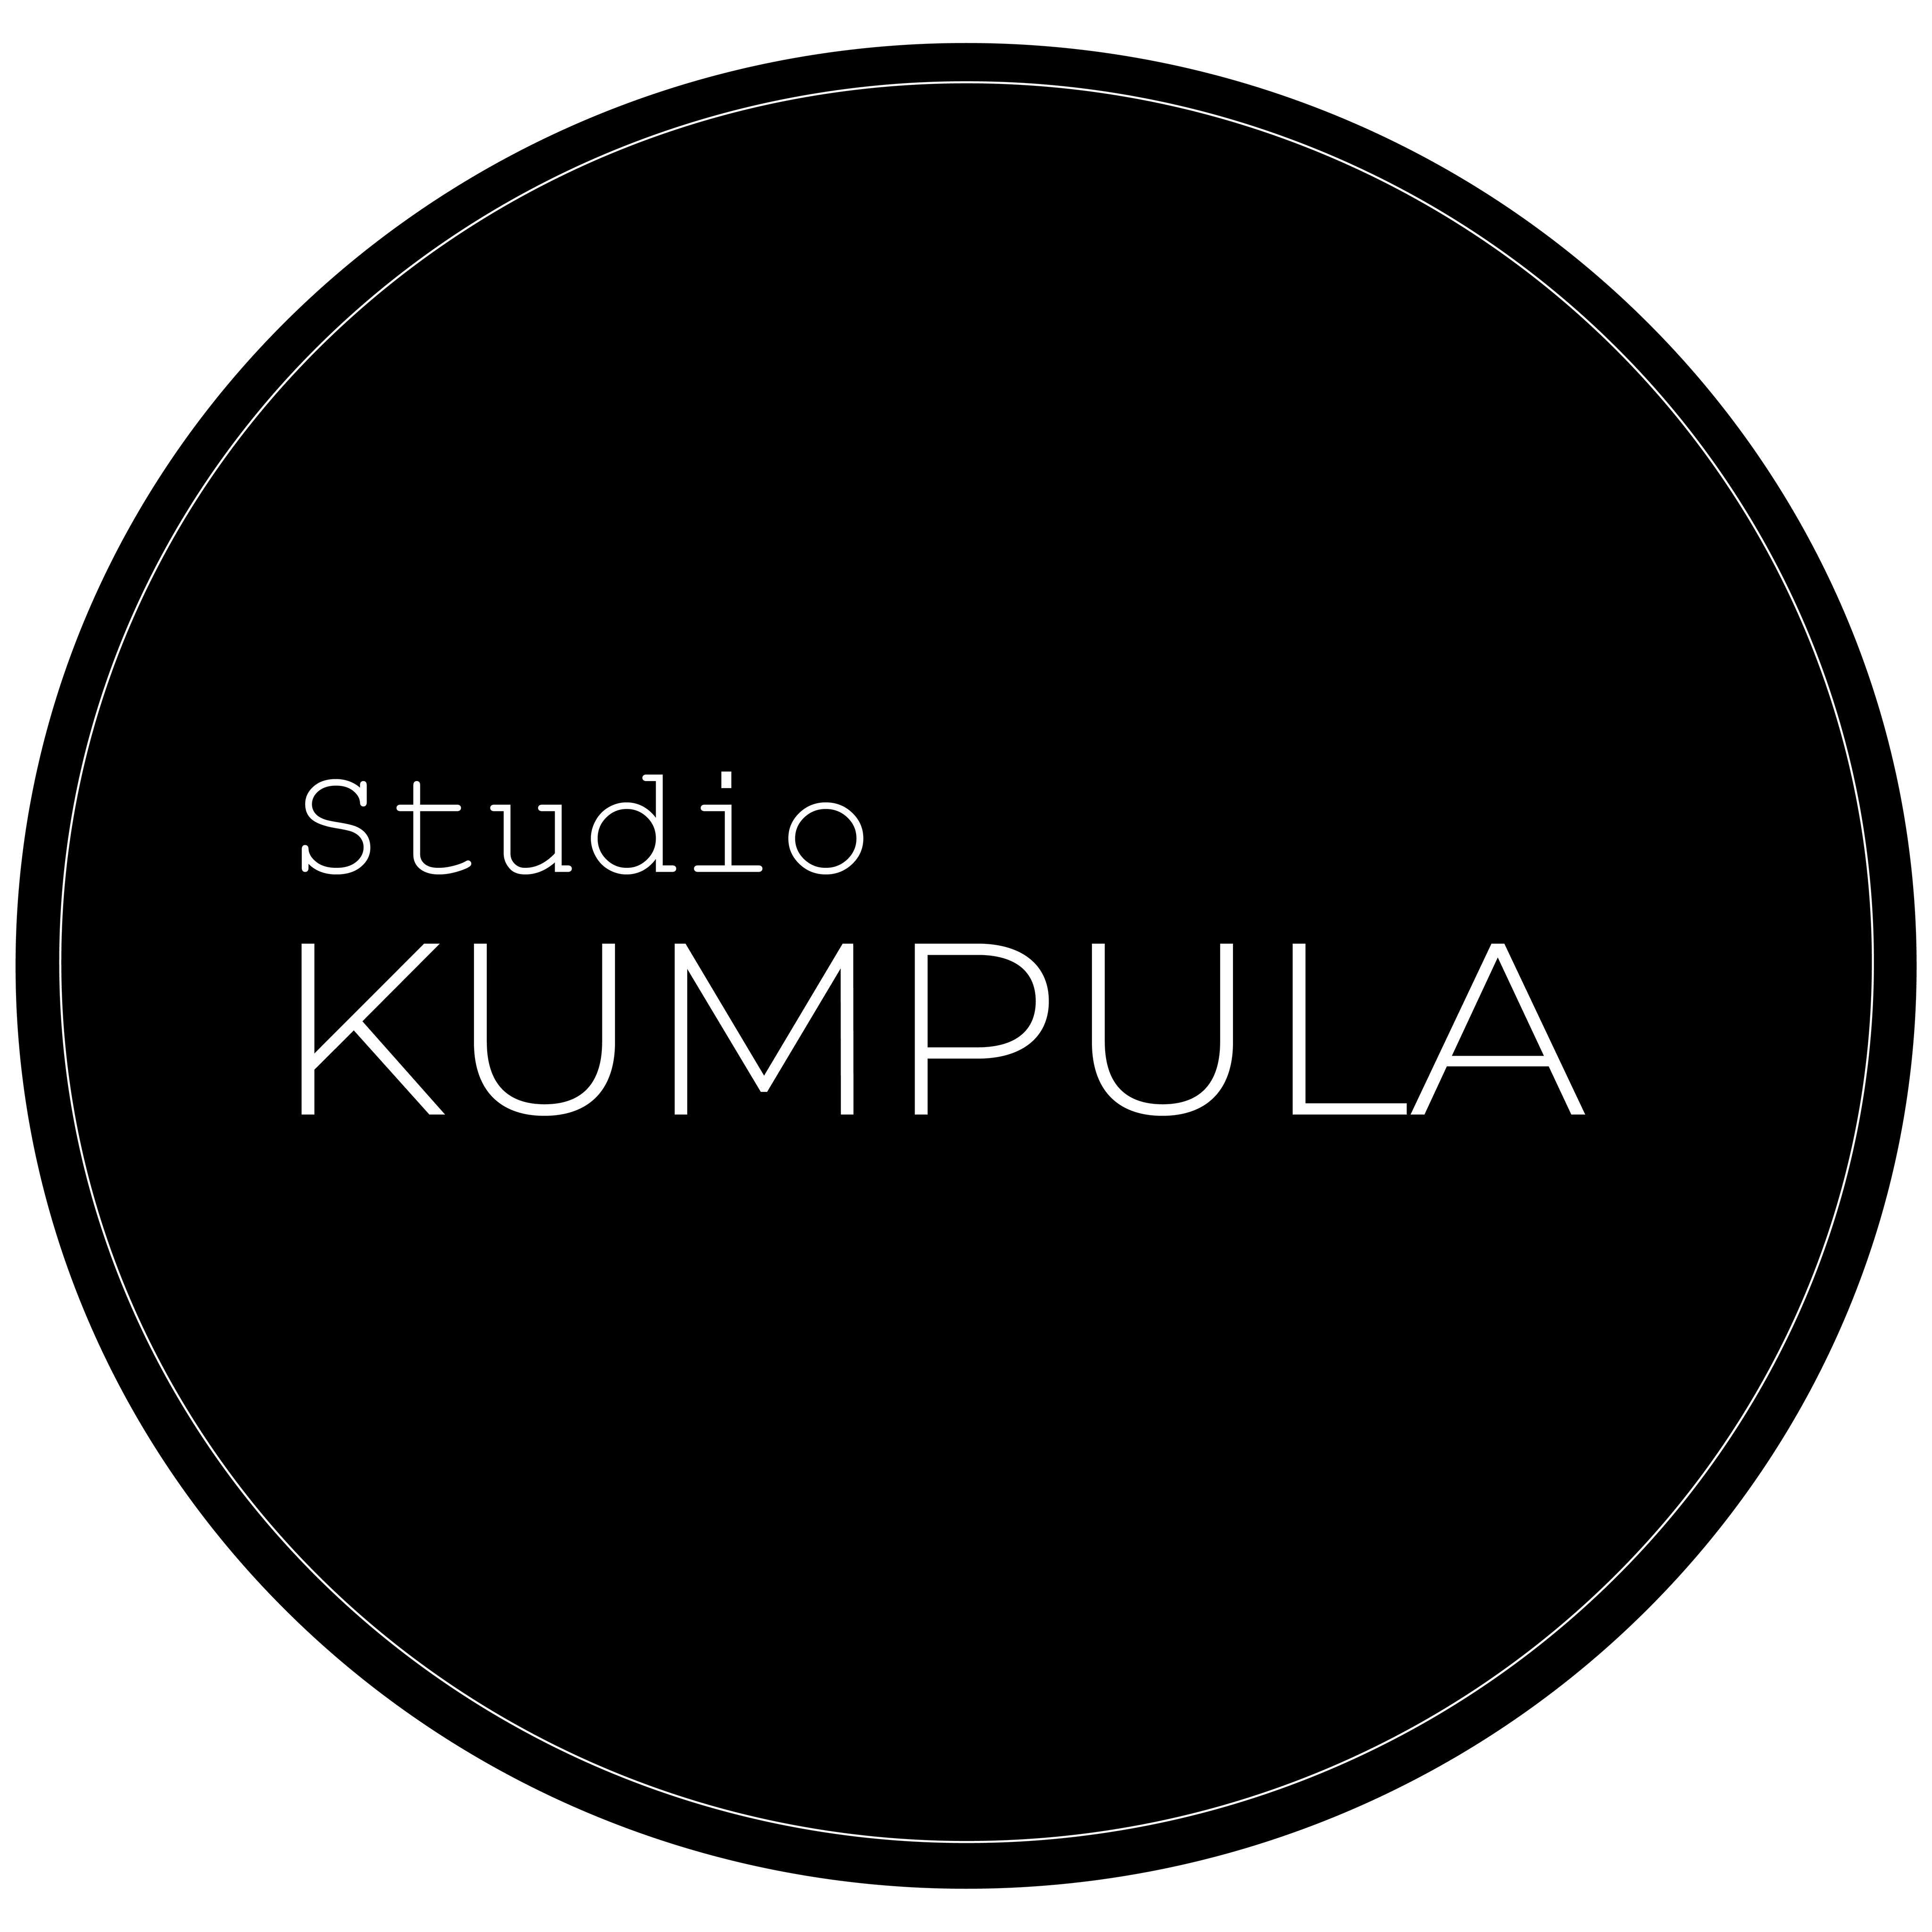 Studio Kumpula